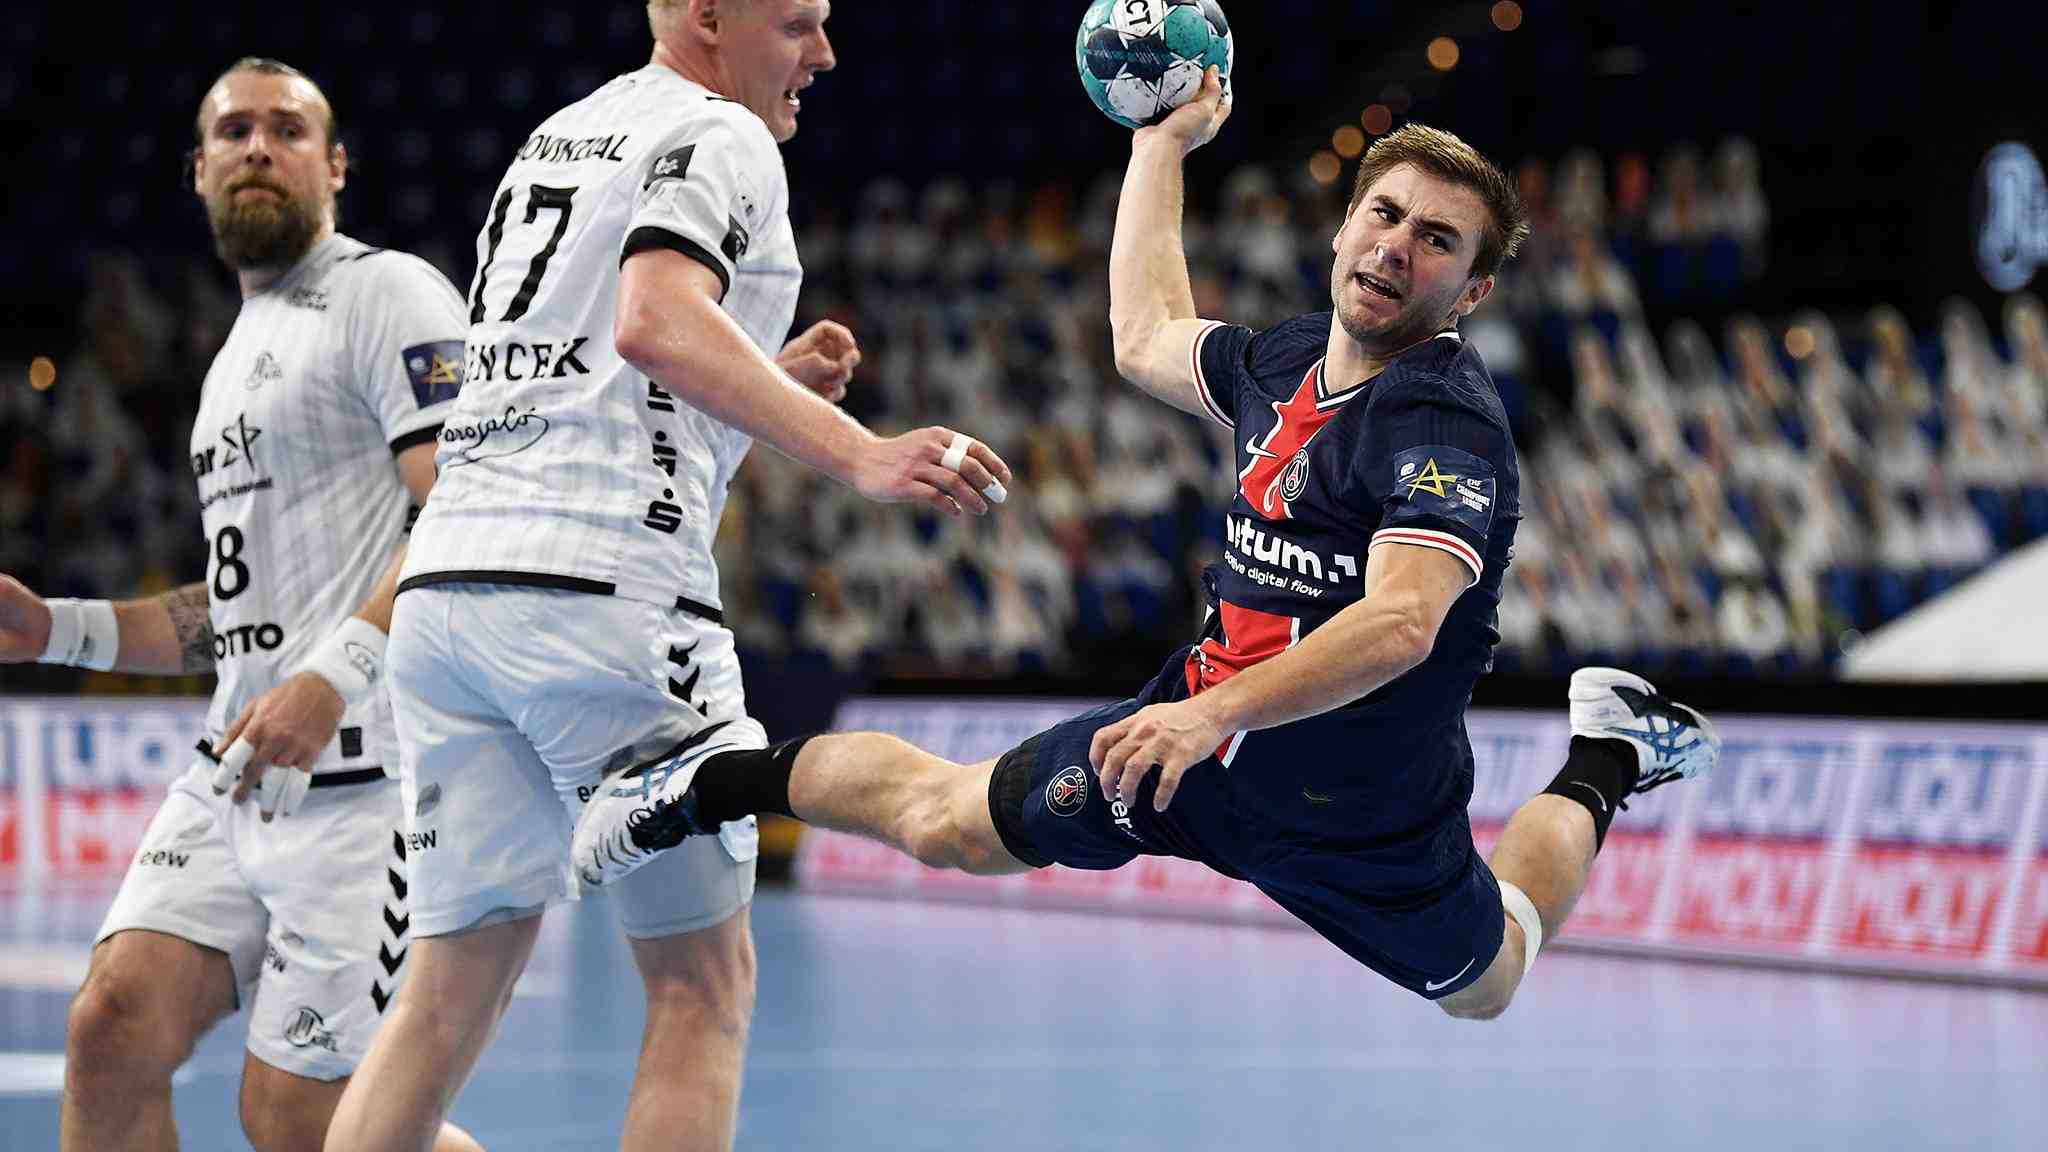 Quelle chaîne retransmet le match de handball de l'équipe de France ?